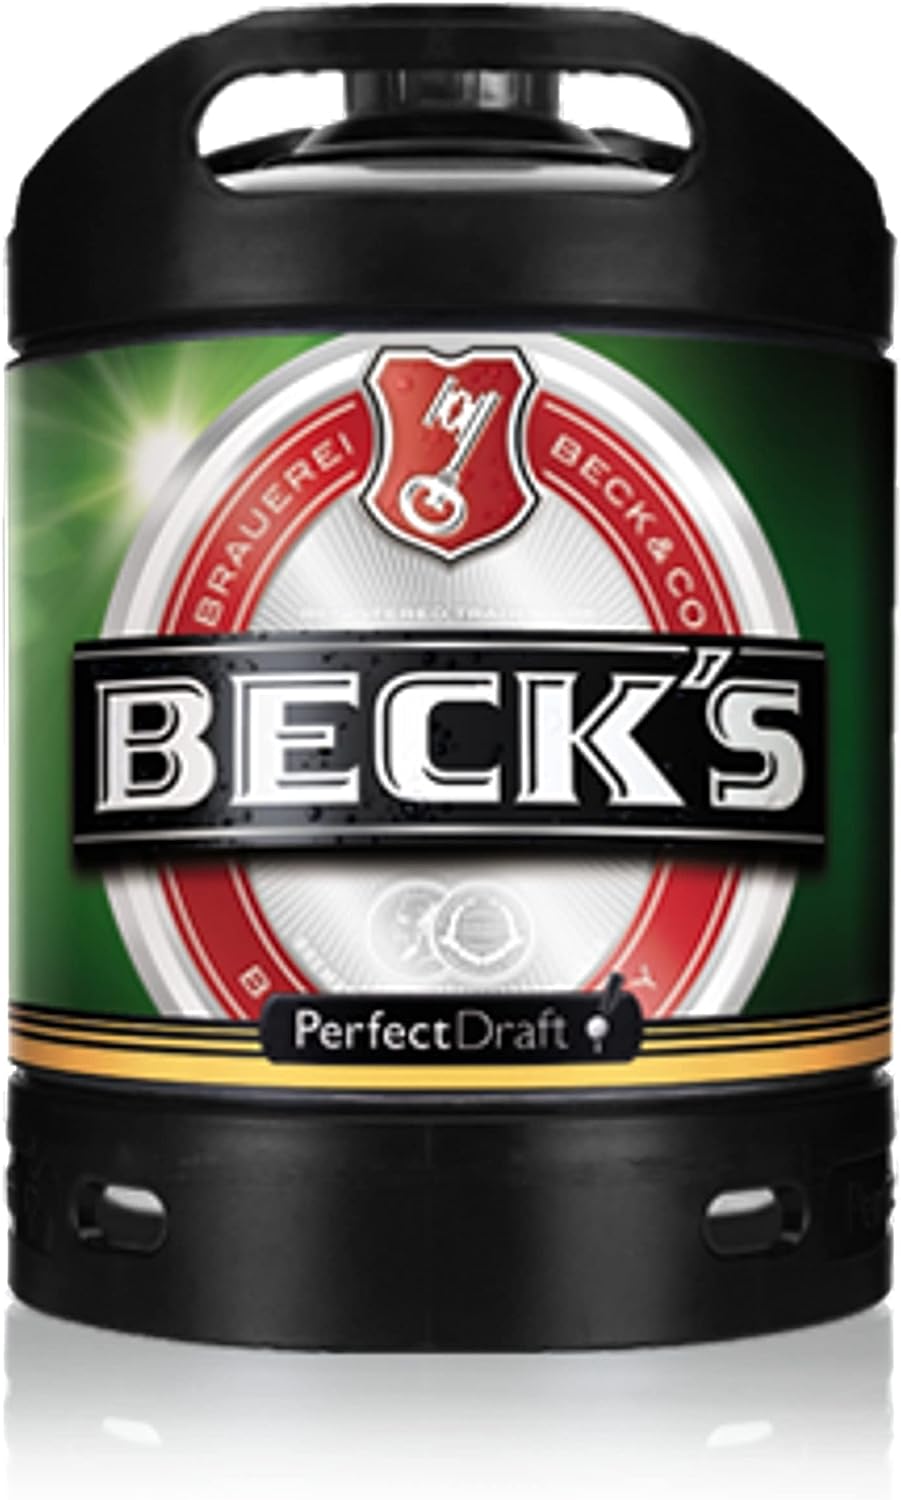 Barril cerveza Becks pils 6L perfectdraft